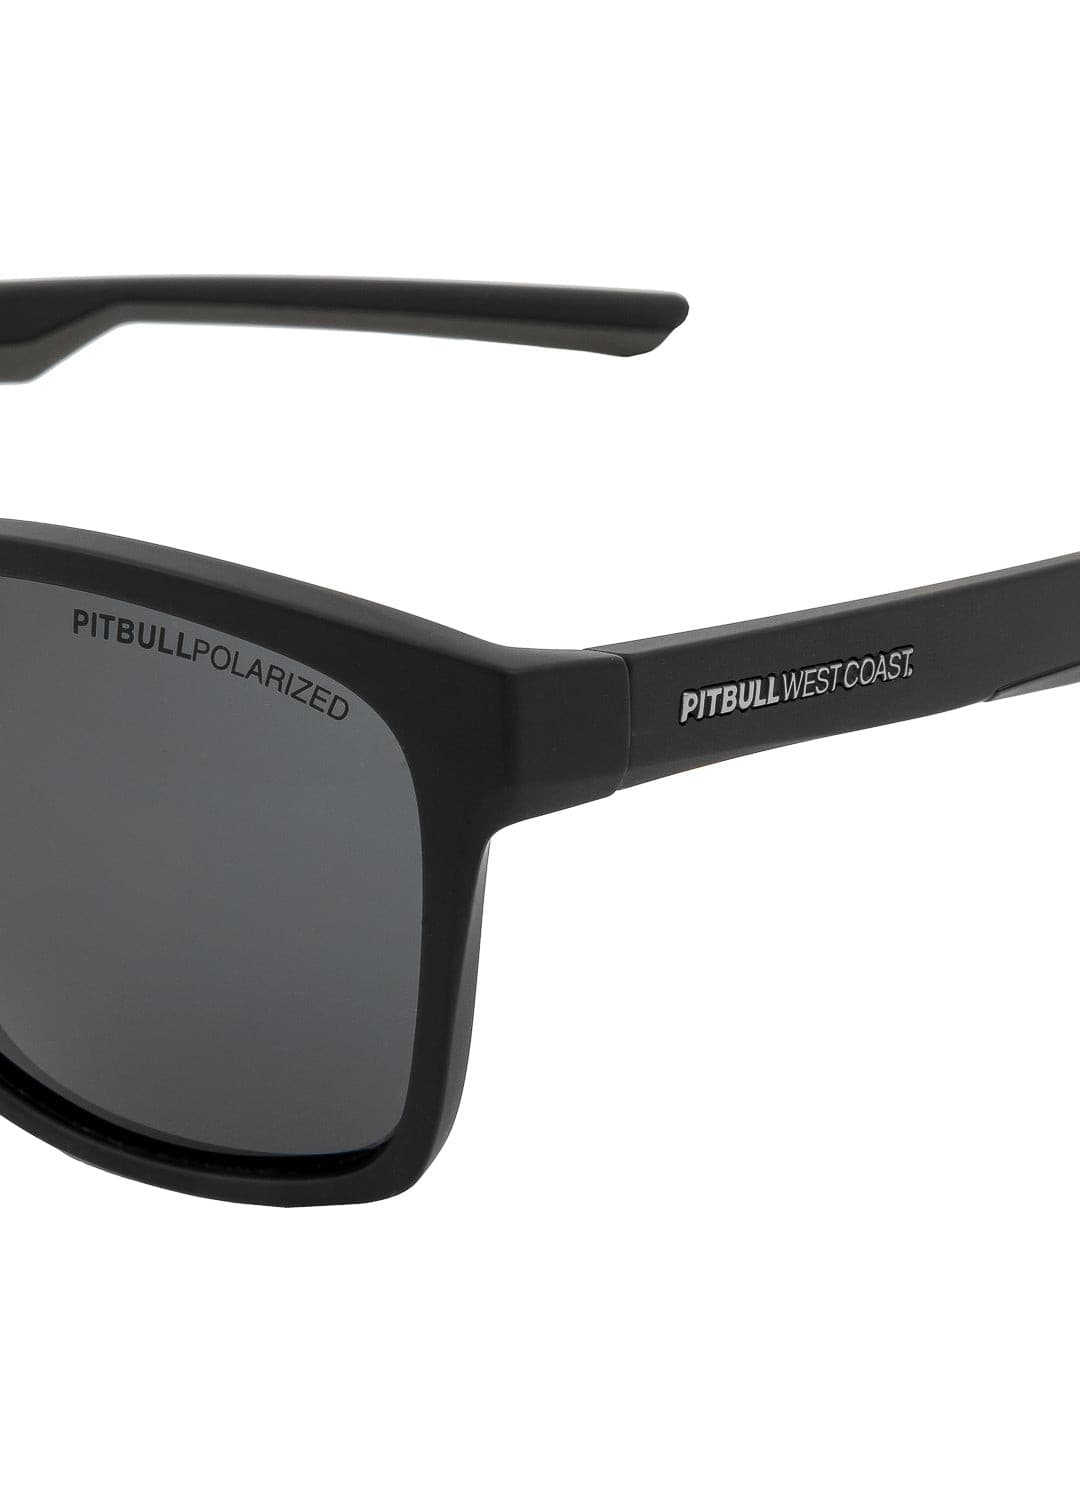 Sunglasses Black/Grey SEASTAR.